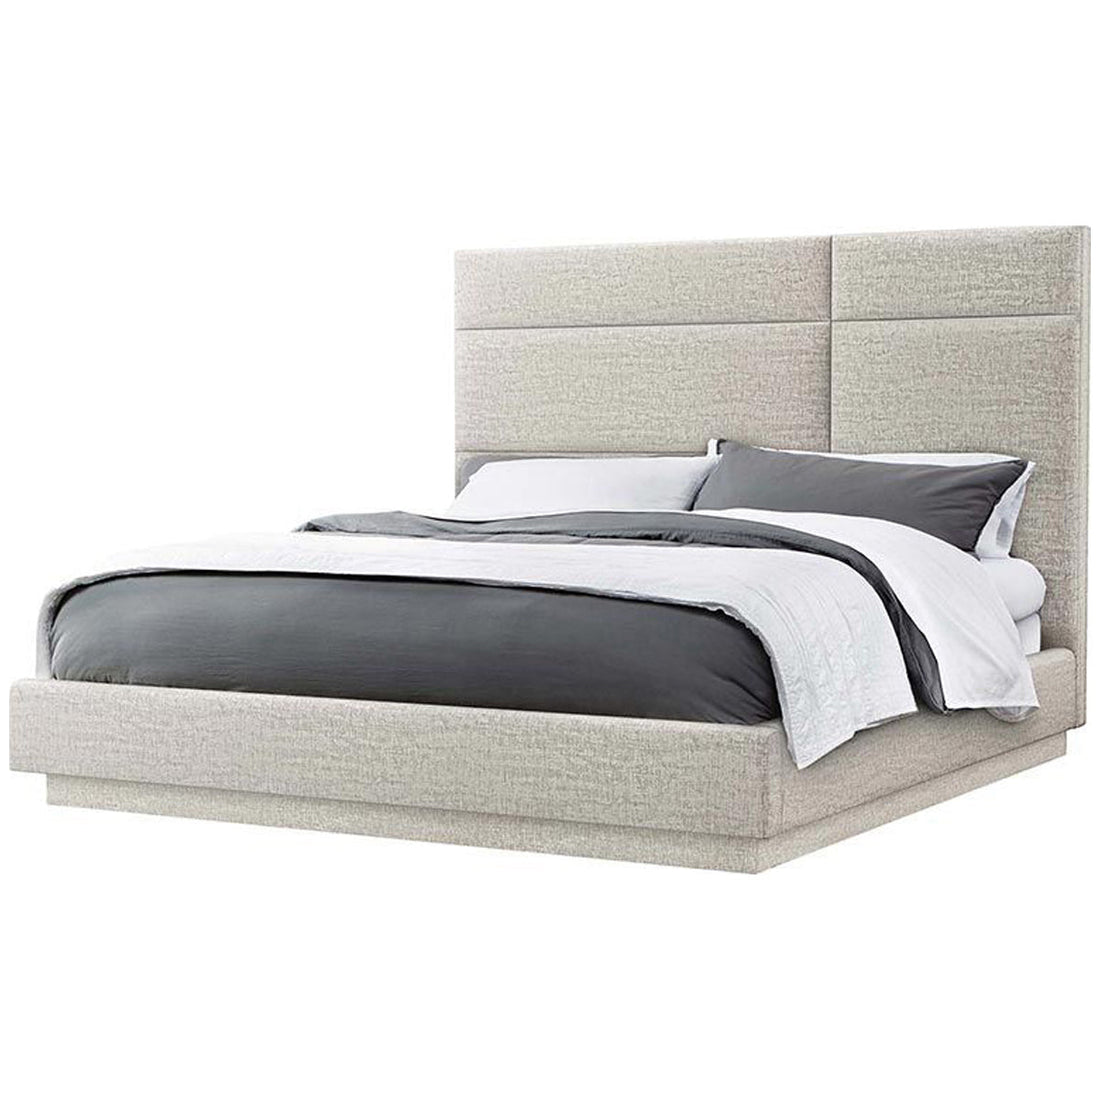 Interlude Home Quadrant Paseo Linen Bed - Storm